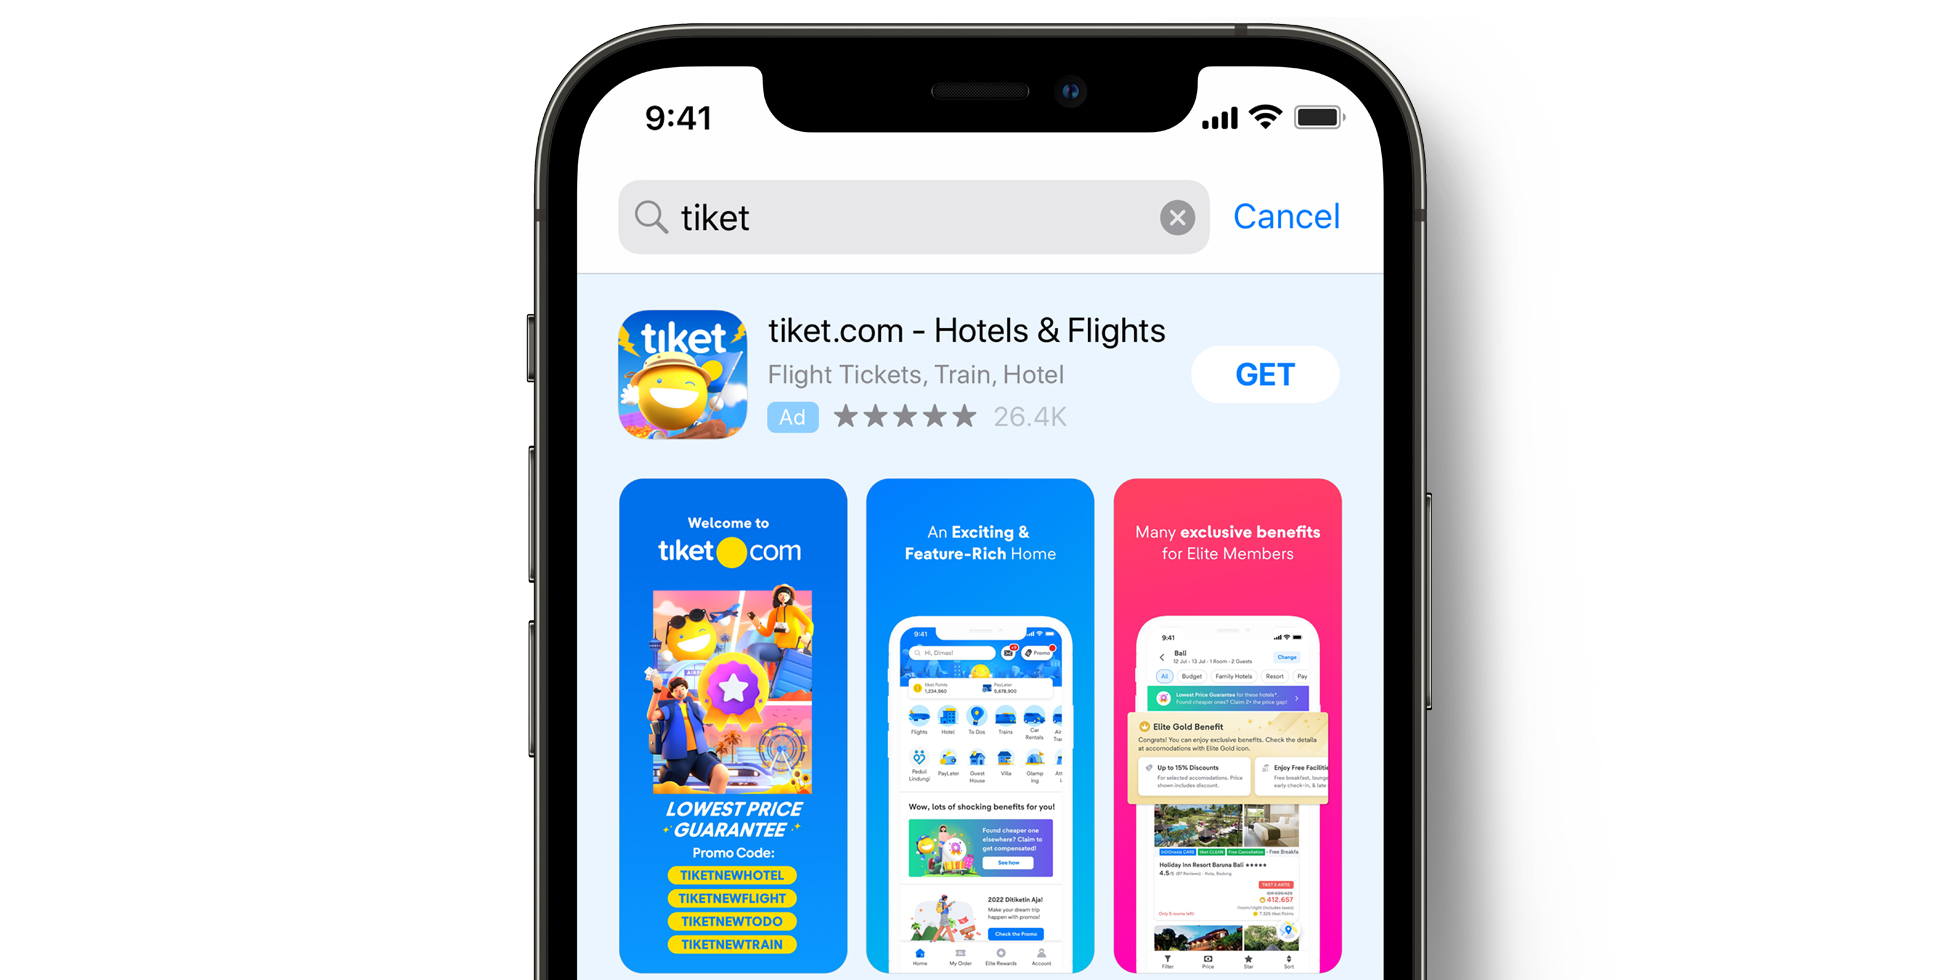 tiket.com ad on the App Store 